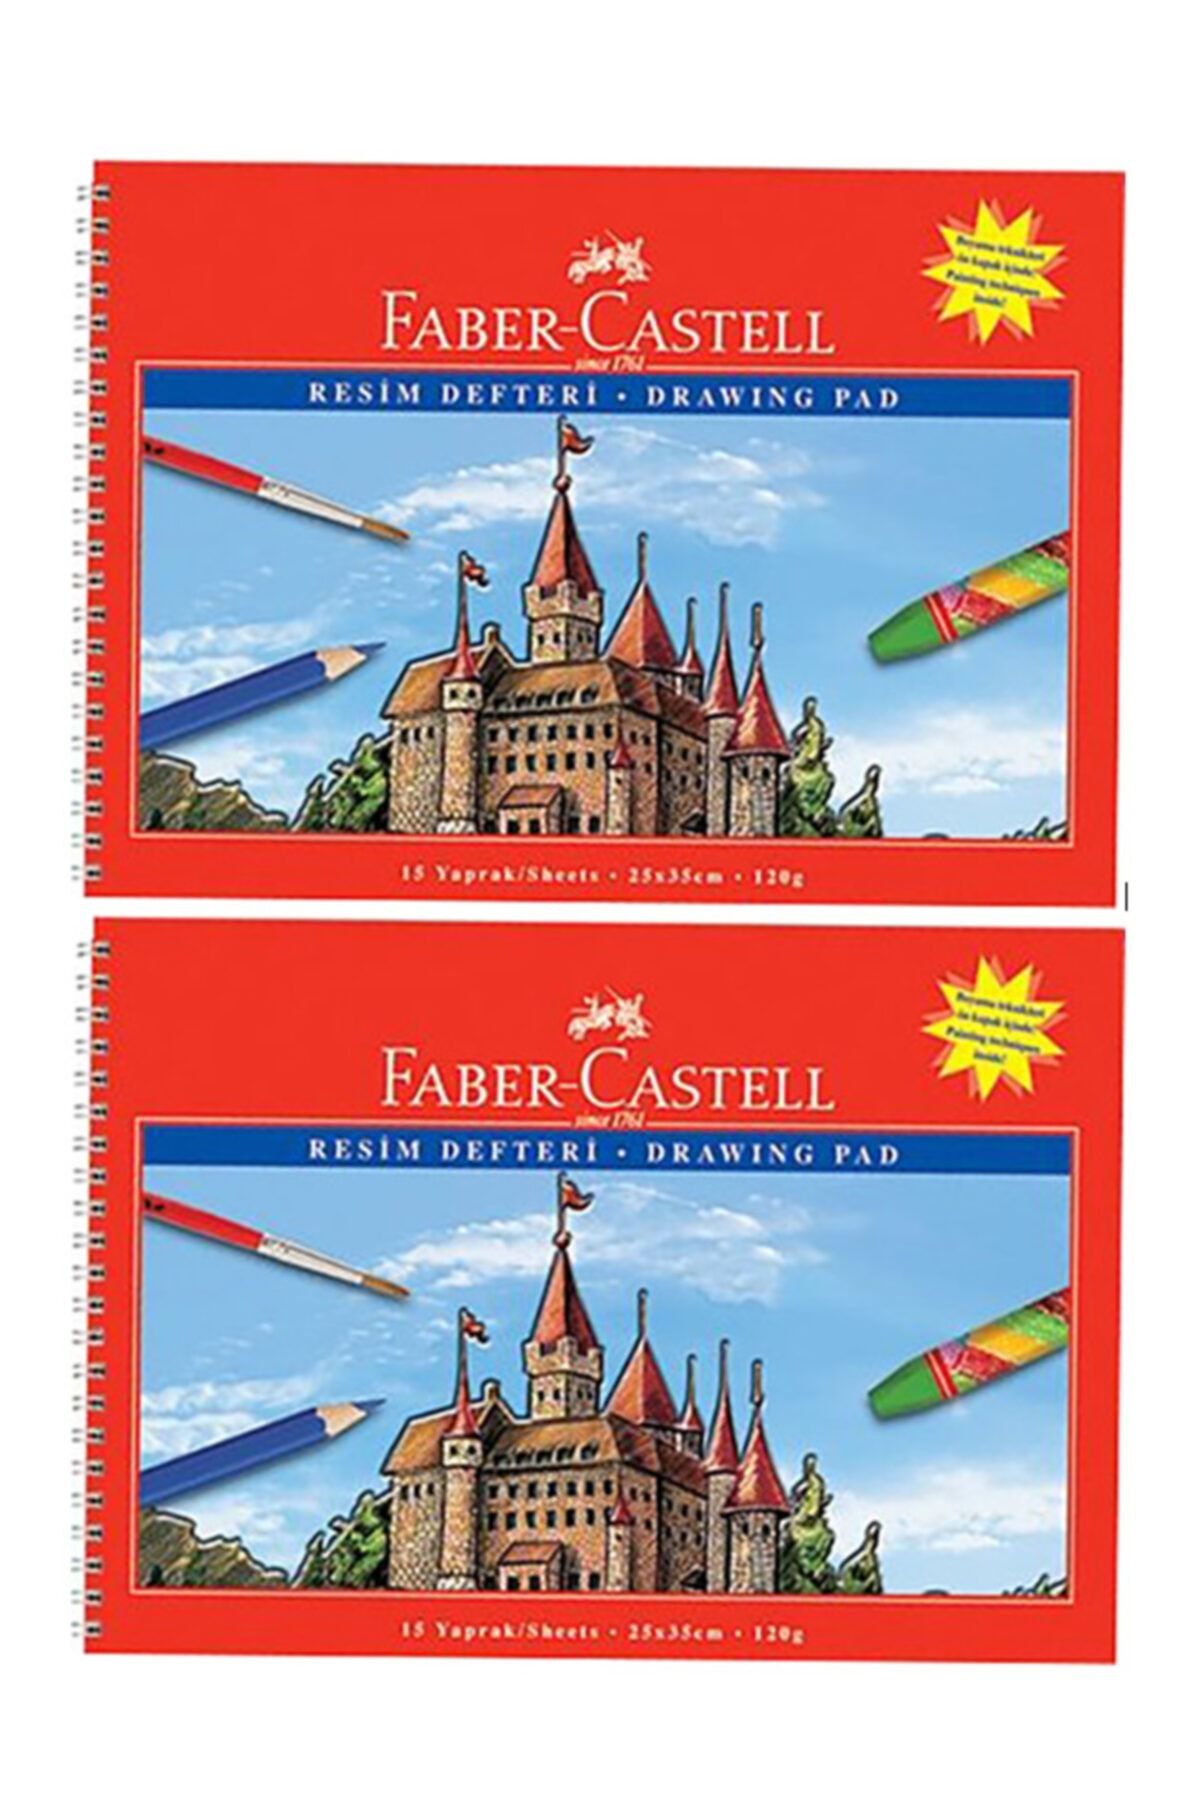 Faber Castell Resim Defteri 15yp. 25*35 Karton Kapak